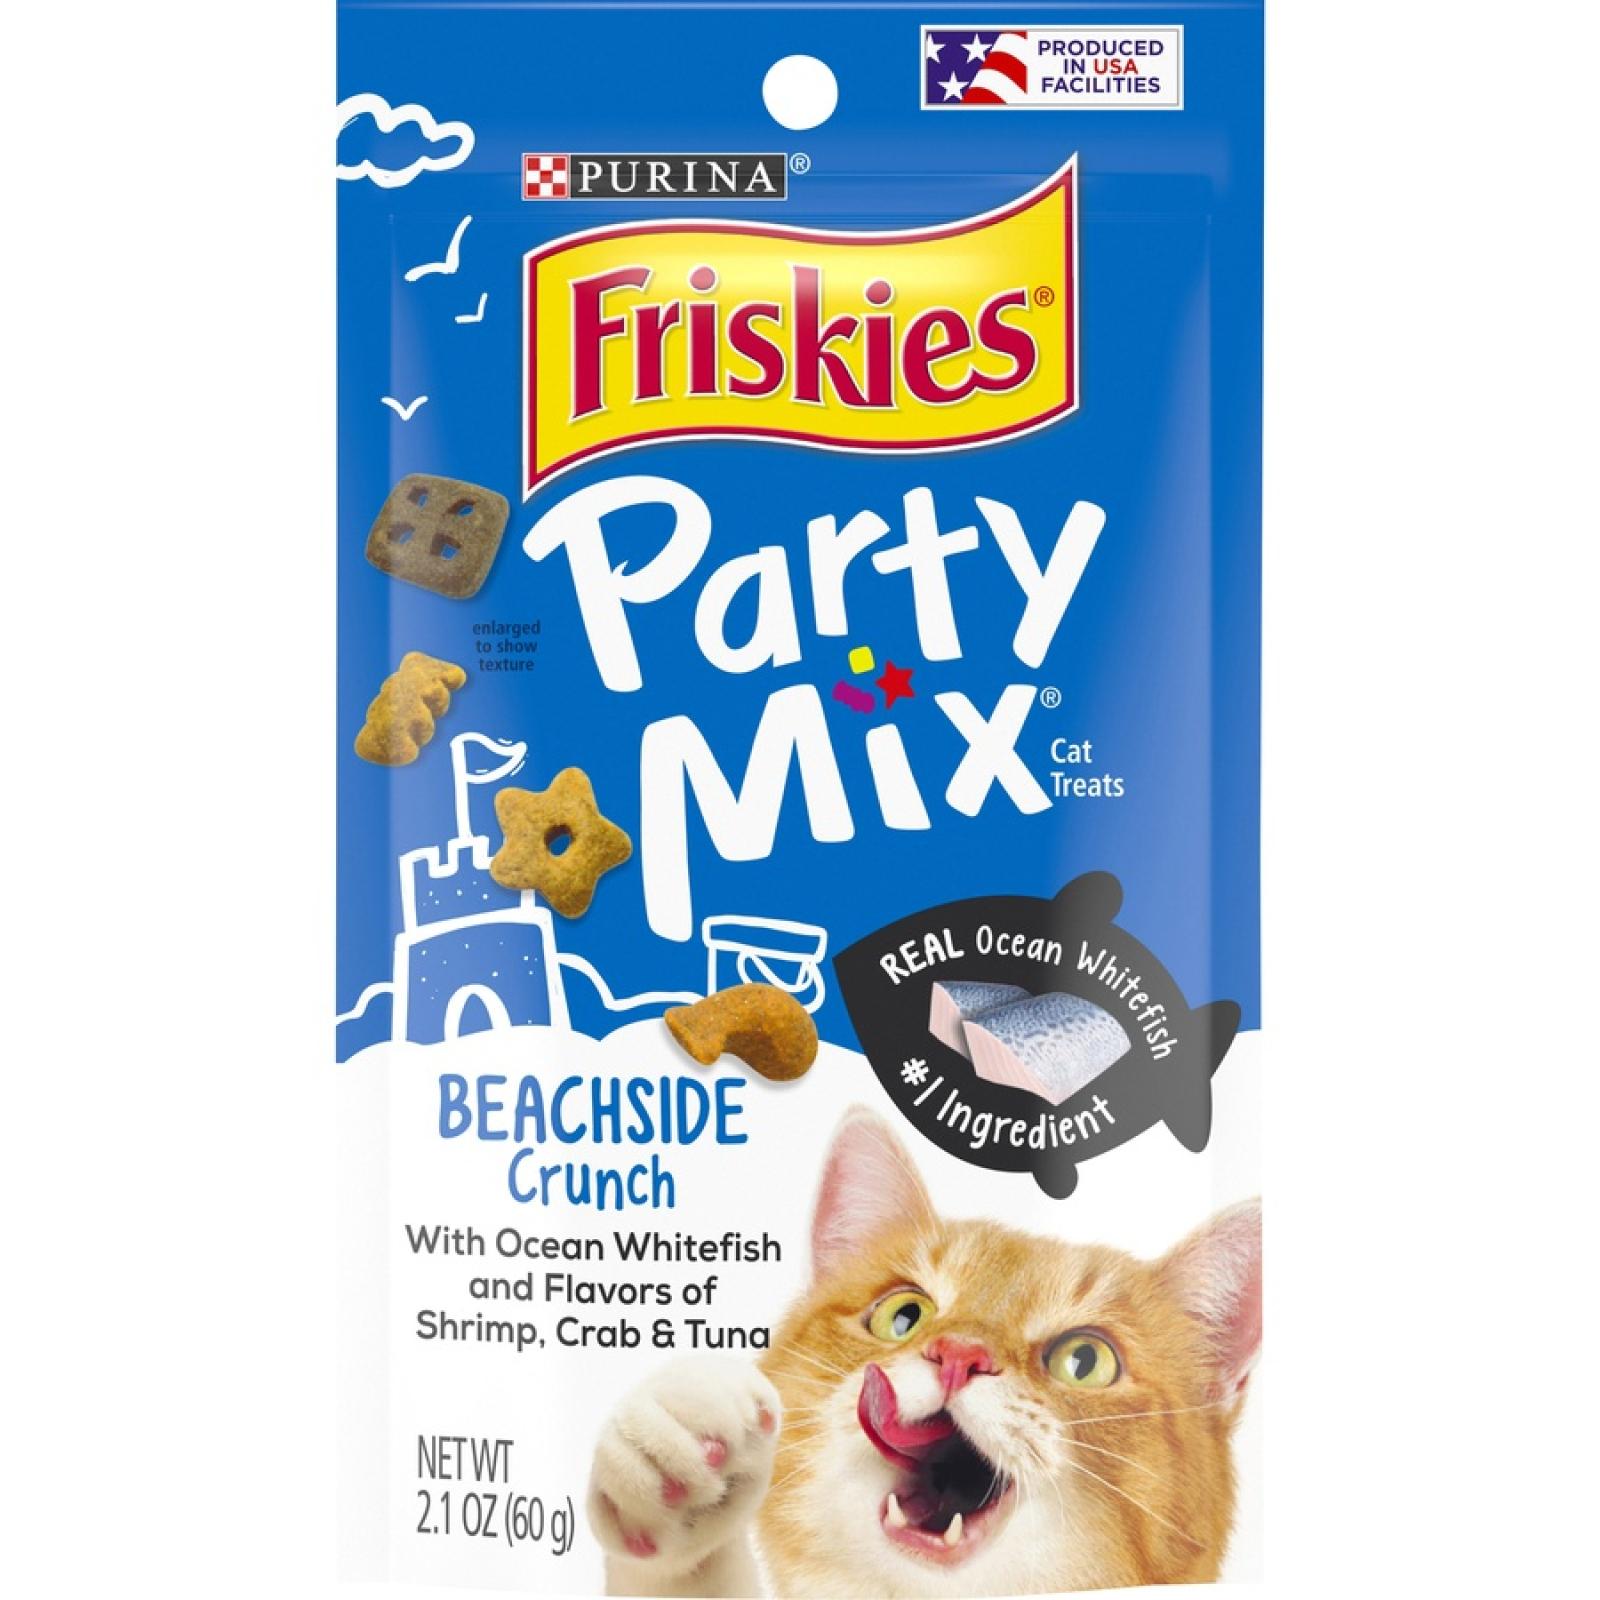 Purina Friskies Party Mix Beachside Crunch Treats